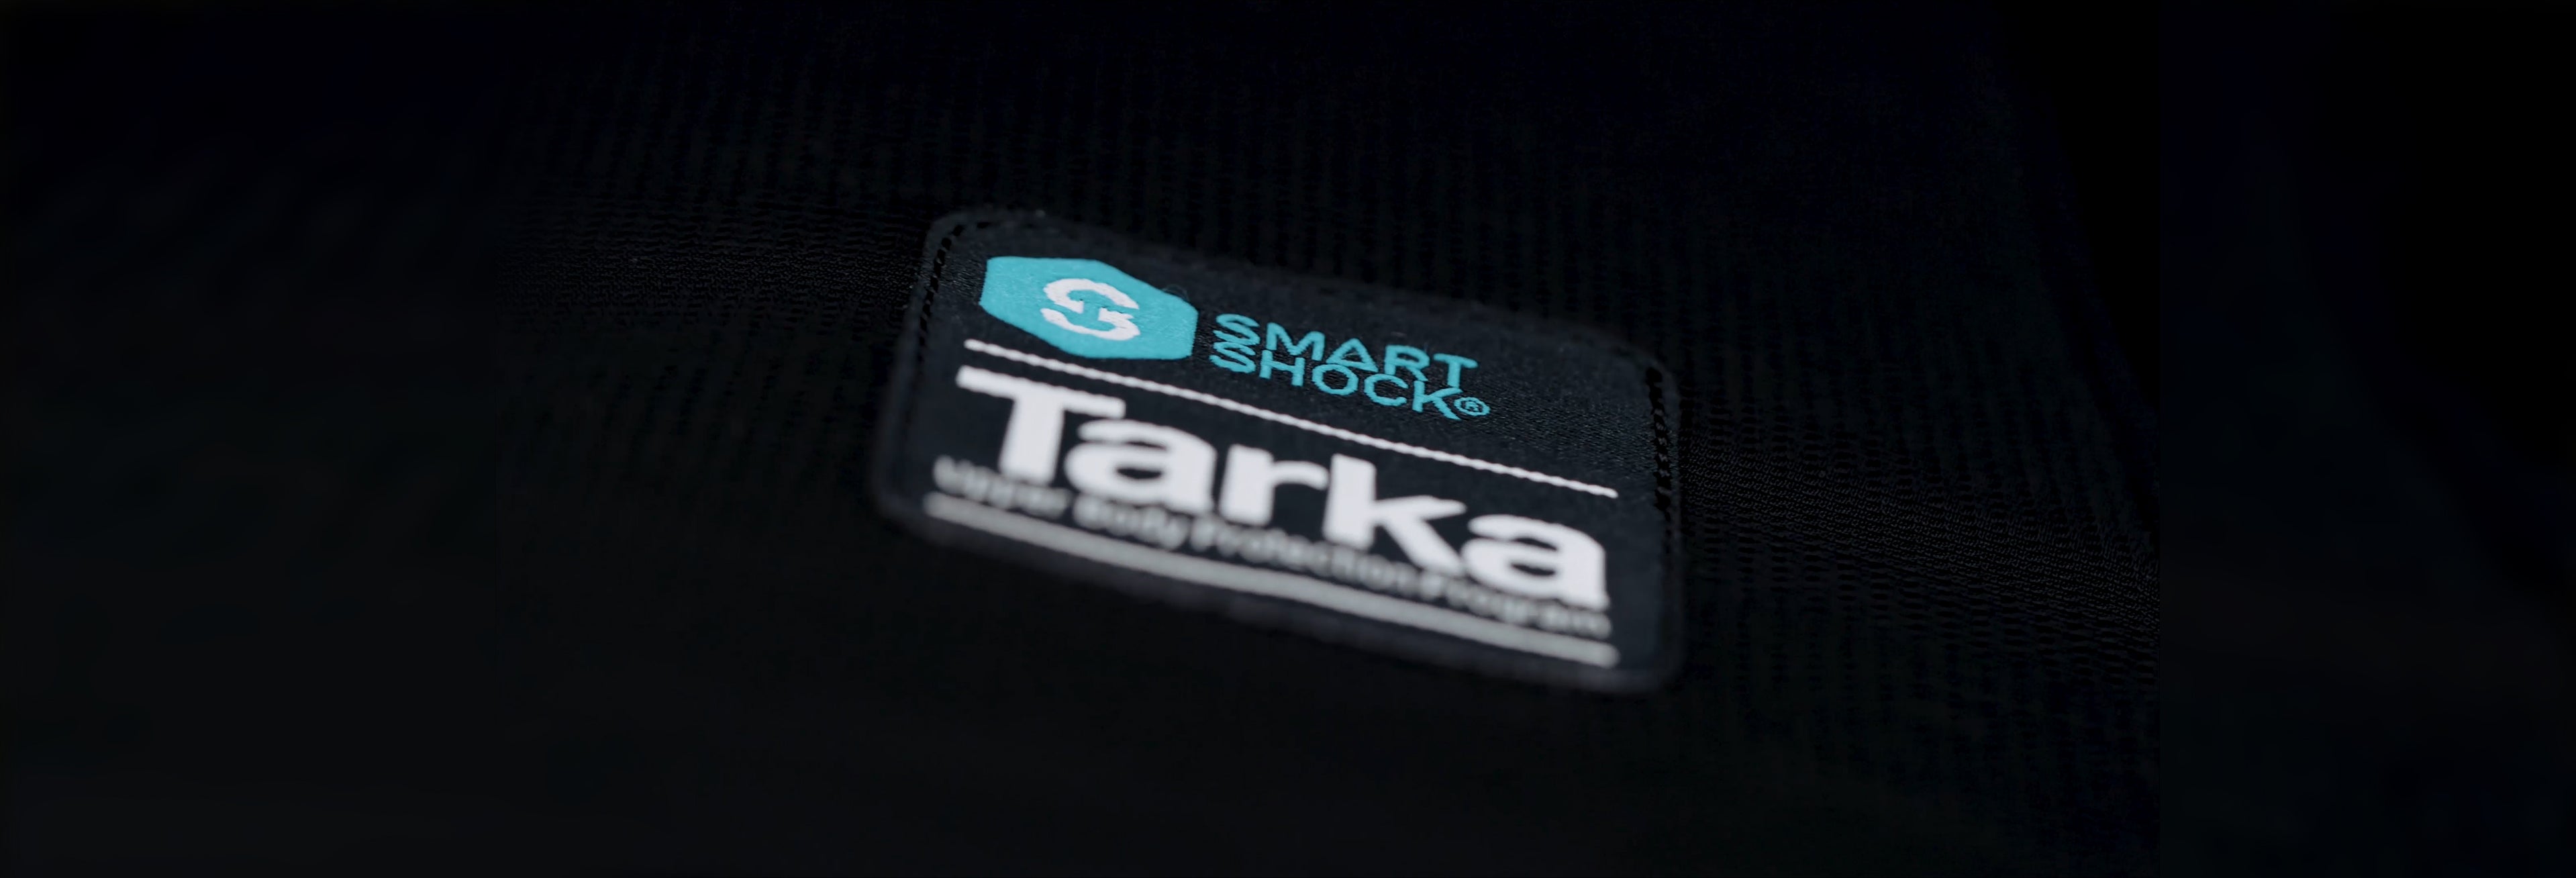 TARKA Body Armor | SmartShock® Certified Protection